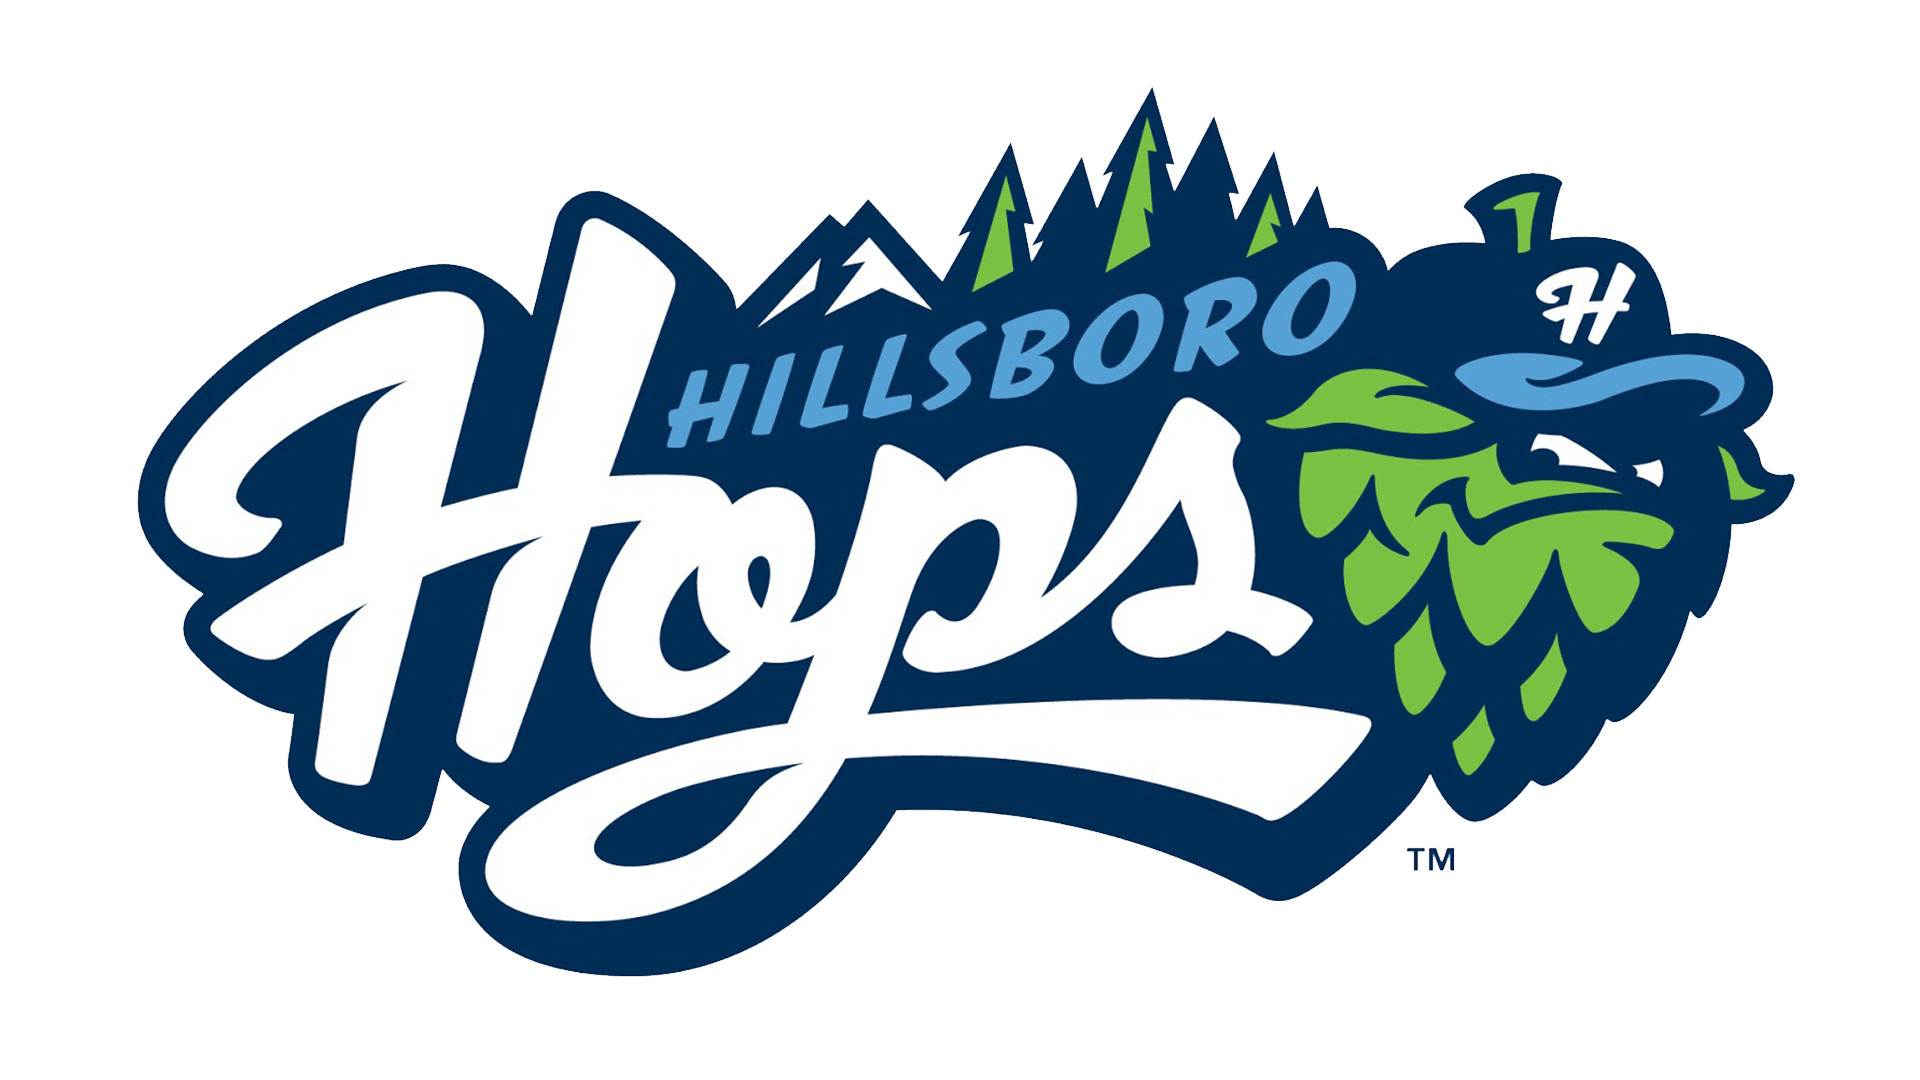 Hops Logo - Hillsboro Hops logo, symbol, meaning, History and Evolution